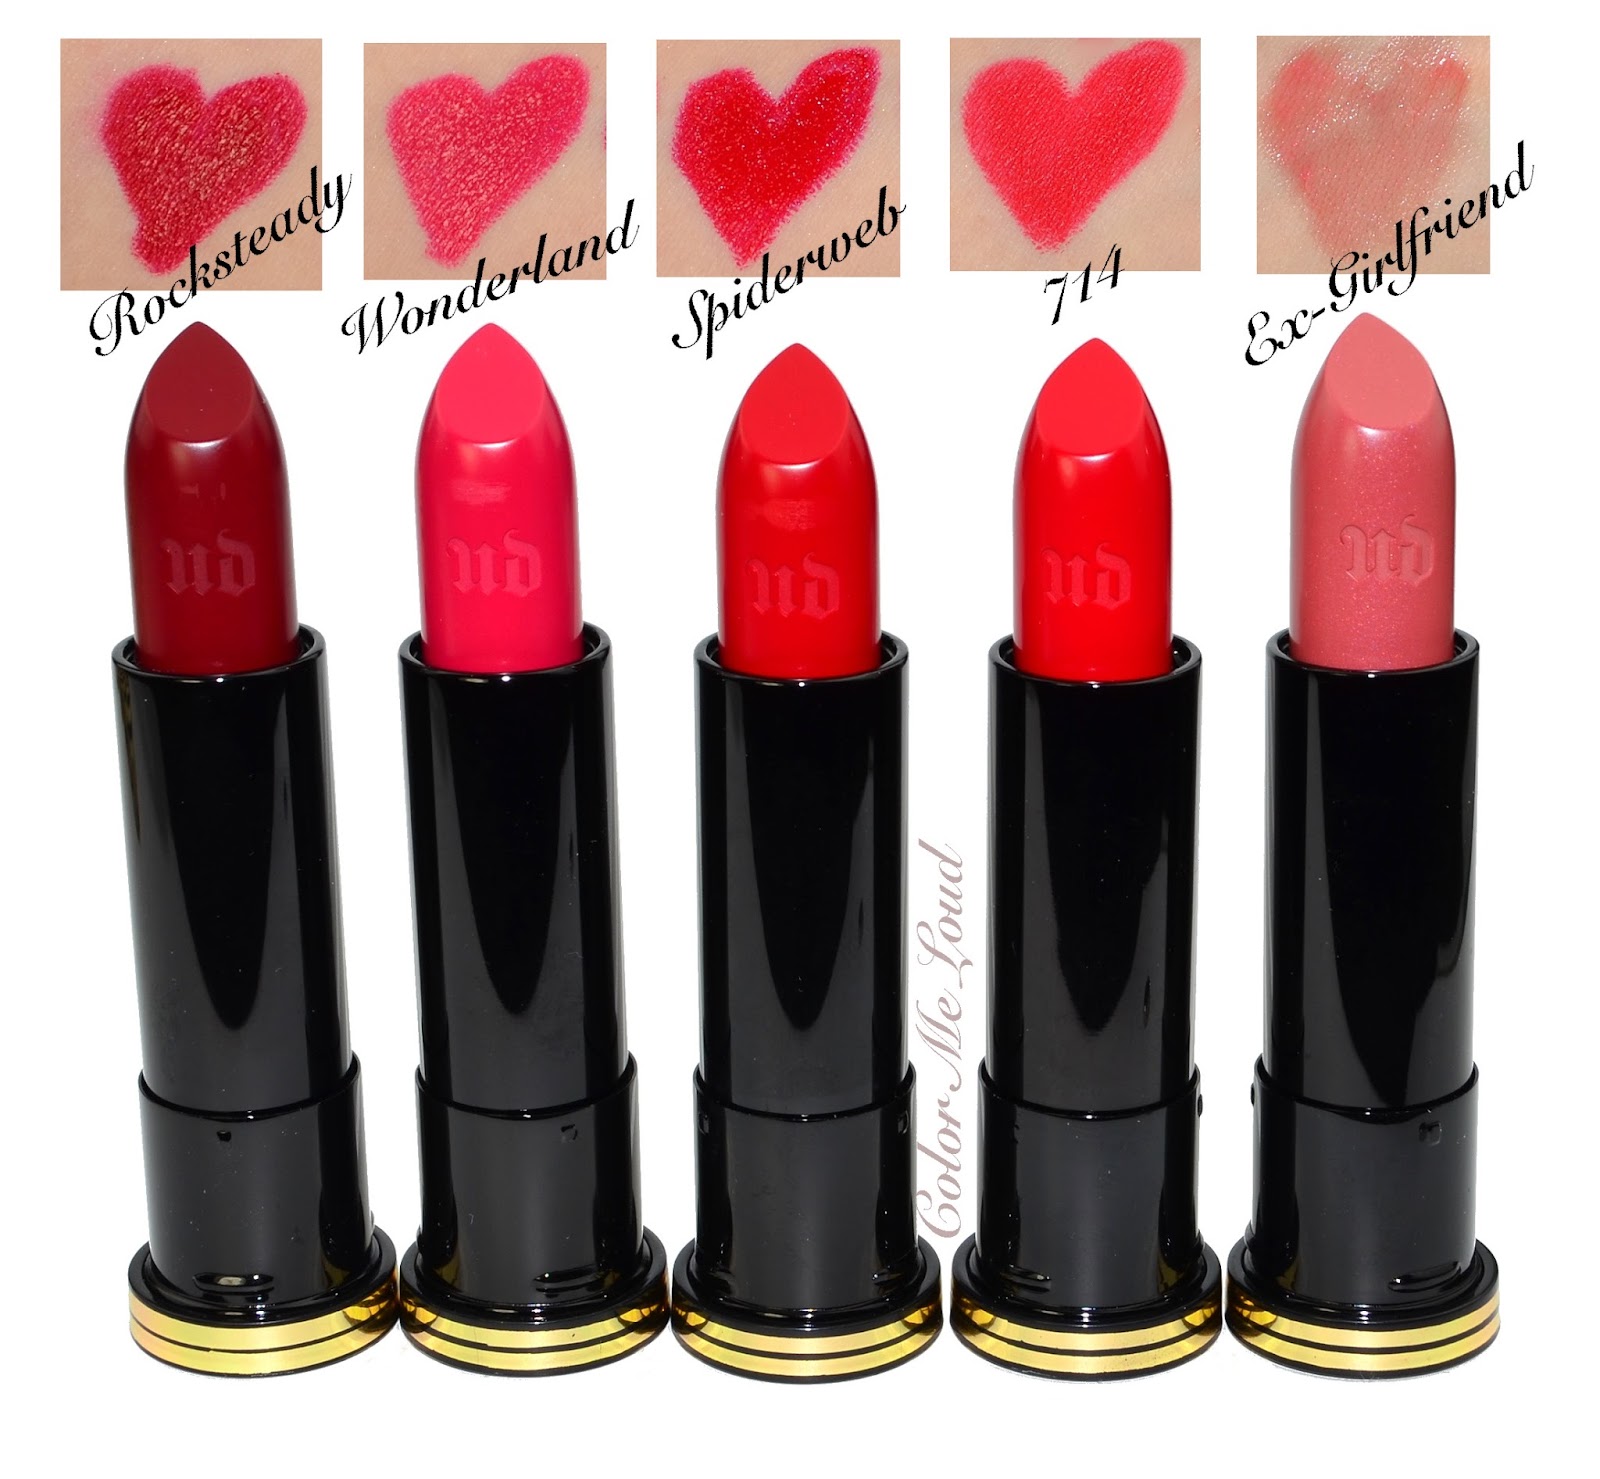 Urban Decay Gwen Stefani Blush Palette Lipsticks & Lip Pencils, Review,  Swatches & FOTD